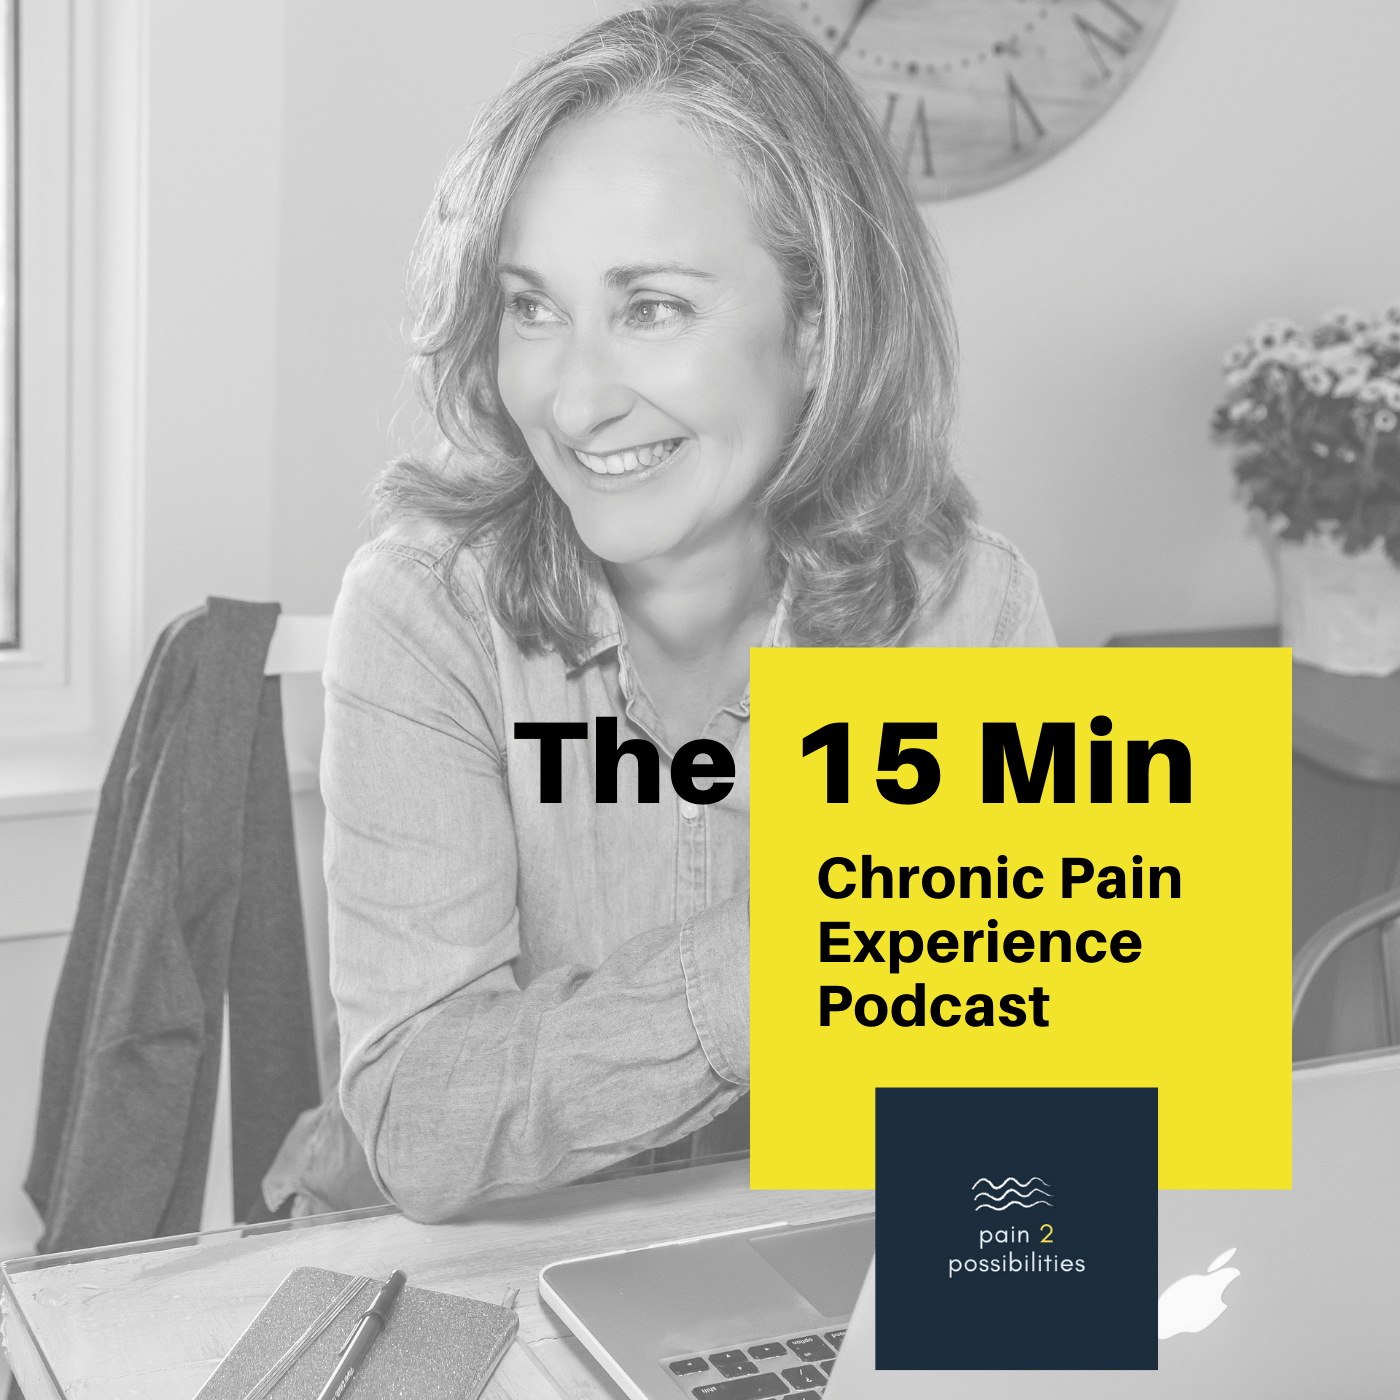 The 15 Min Chronic Pain Experience Podcast